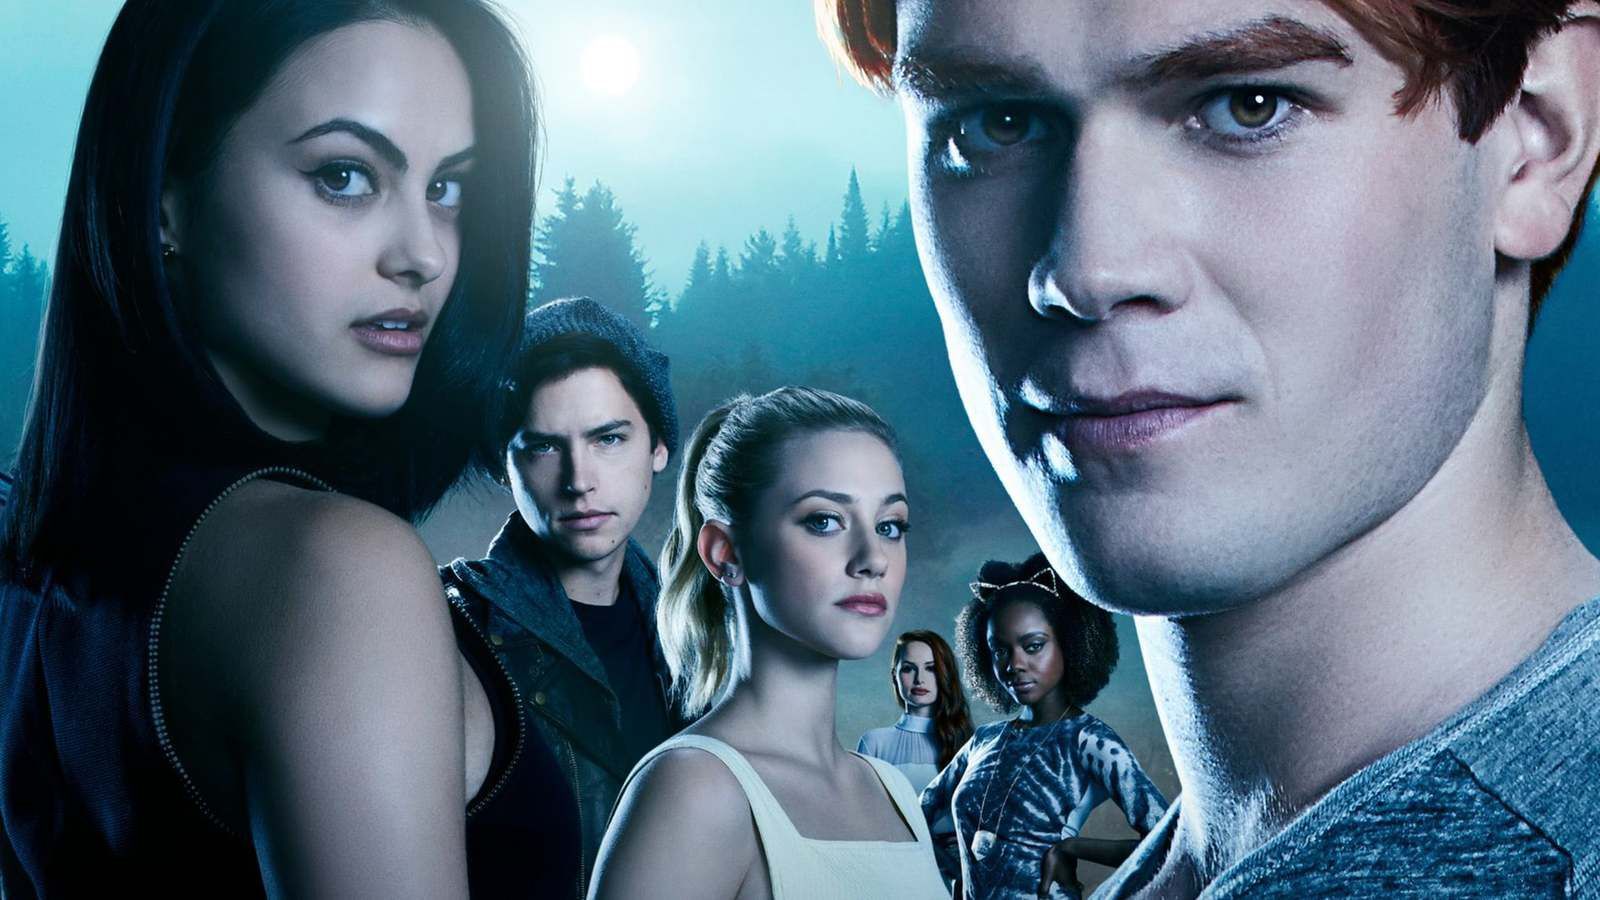 Full Watch Riverdale Season 4 Episode 14 on Stream Season 4 Episode 14